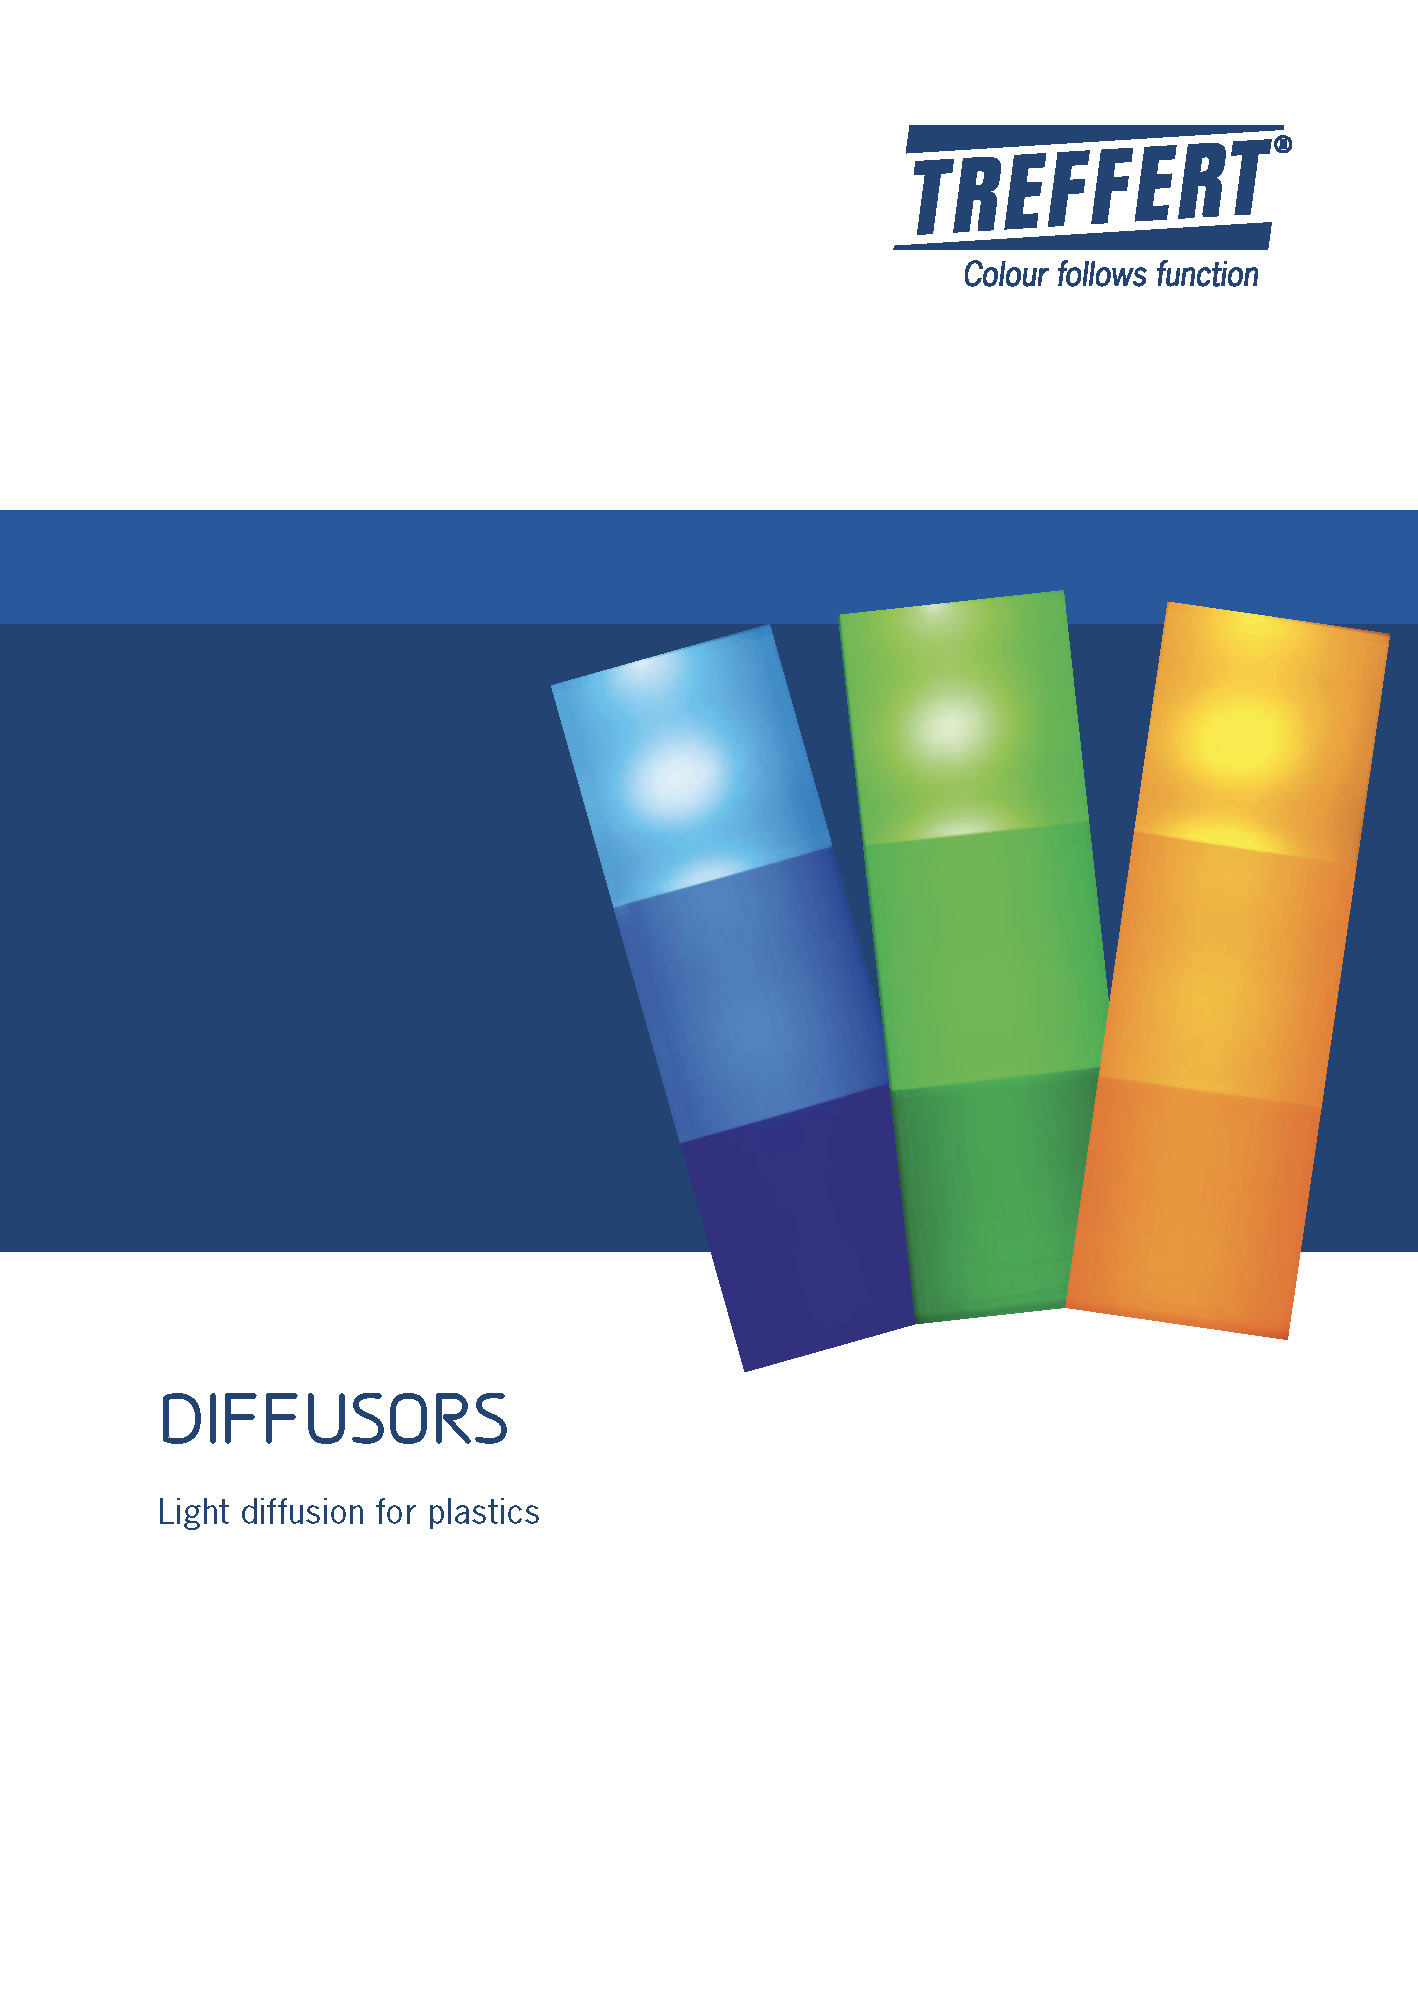 Treffert brochure about diffusors - Light diffusion for plastics